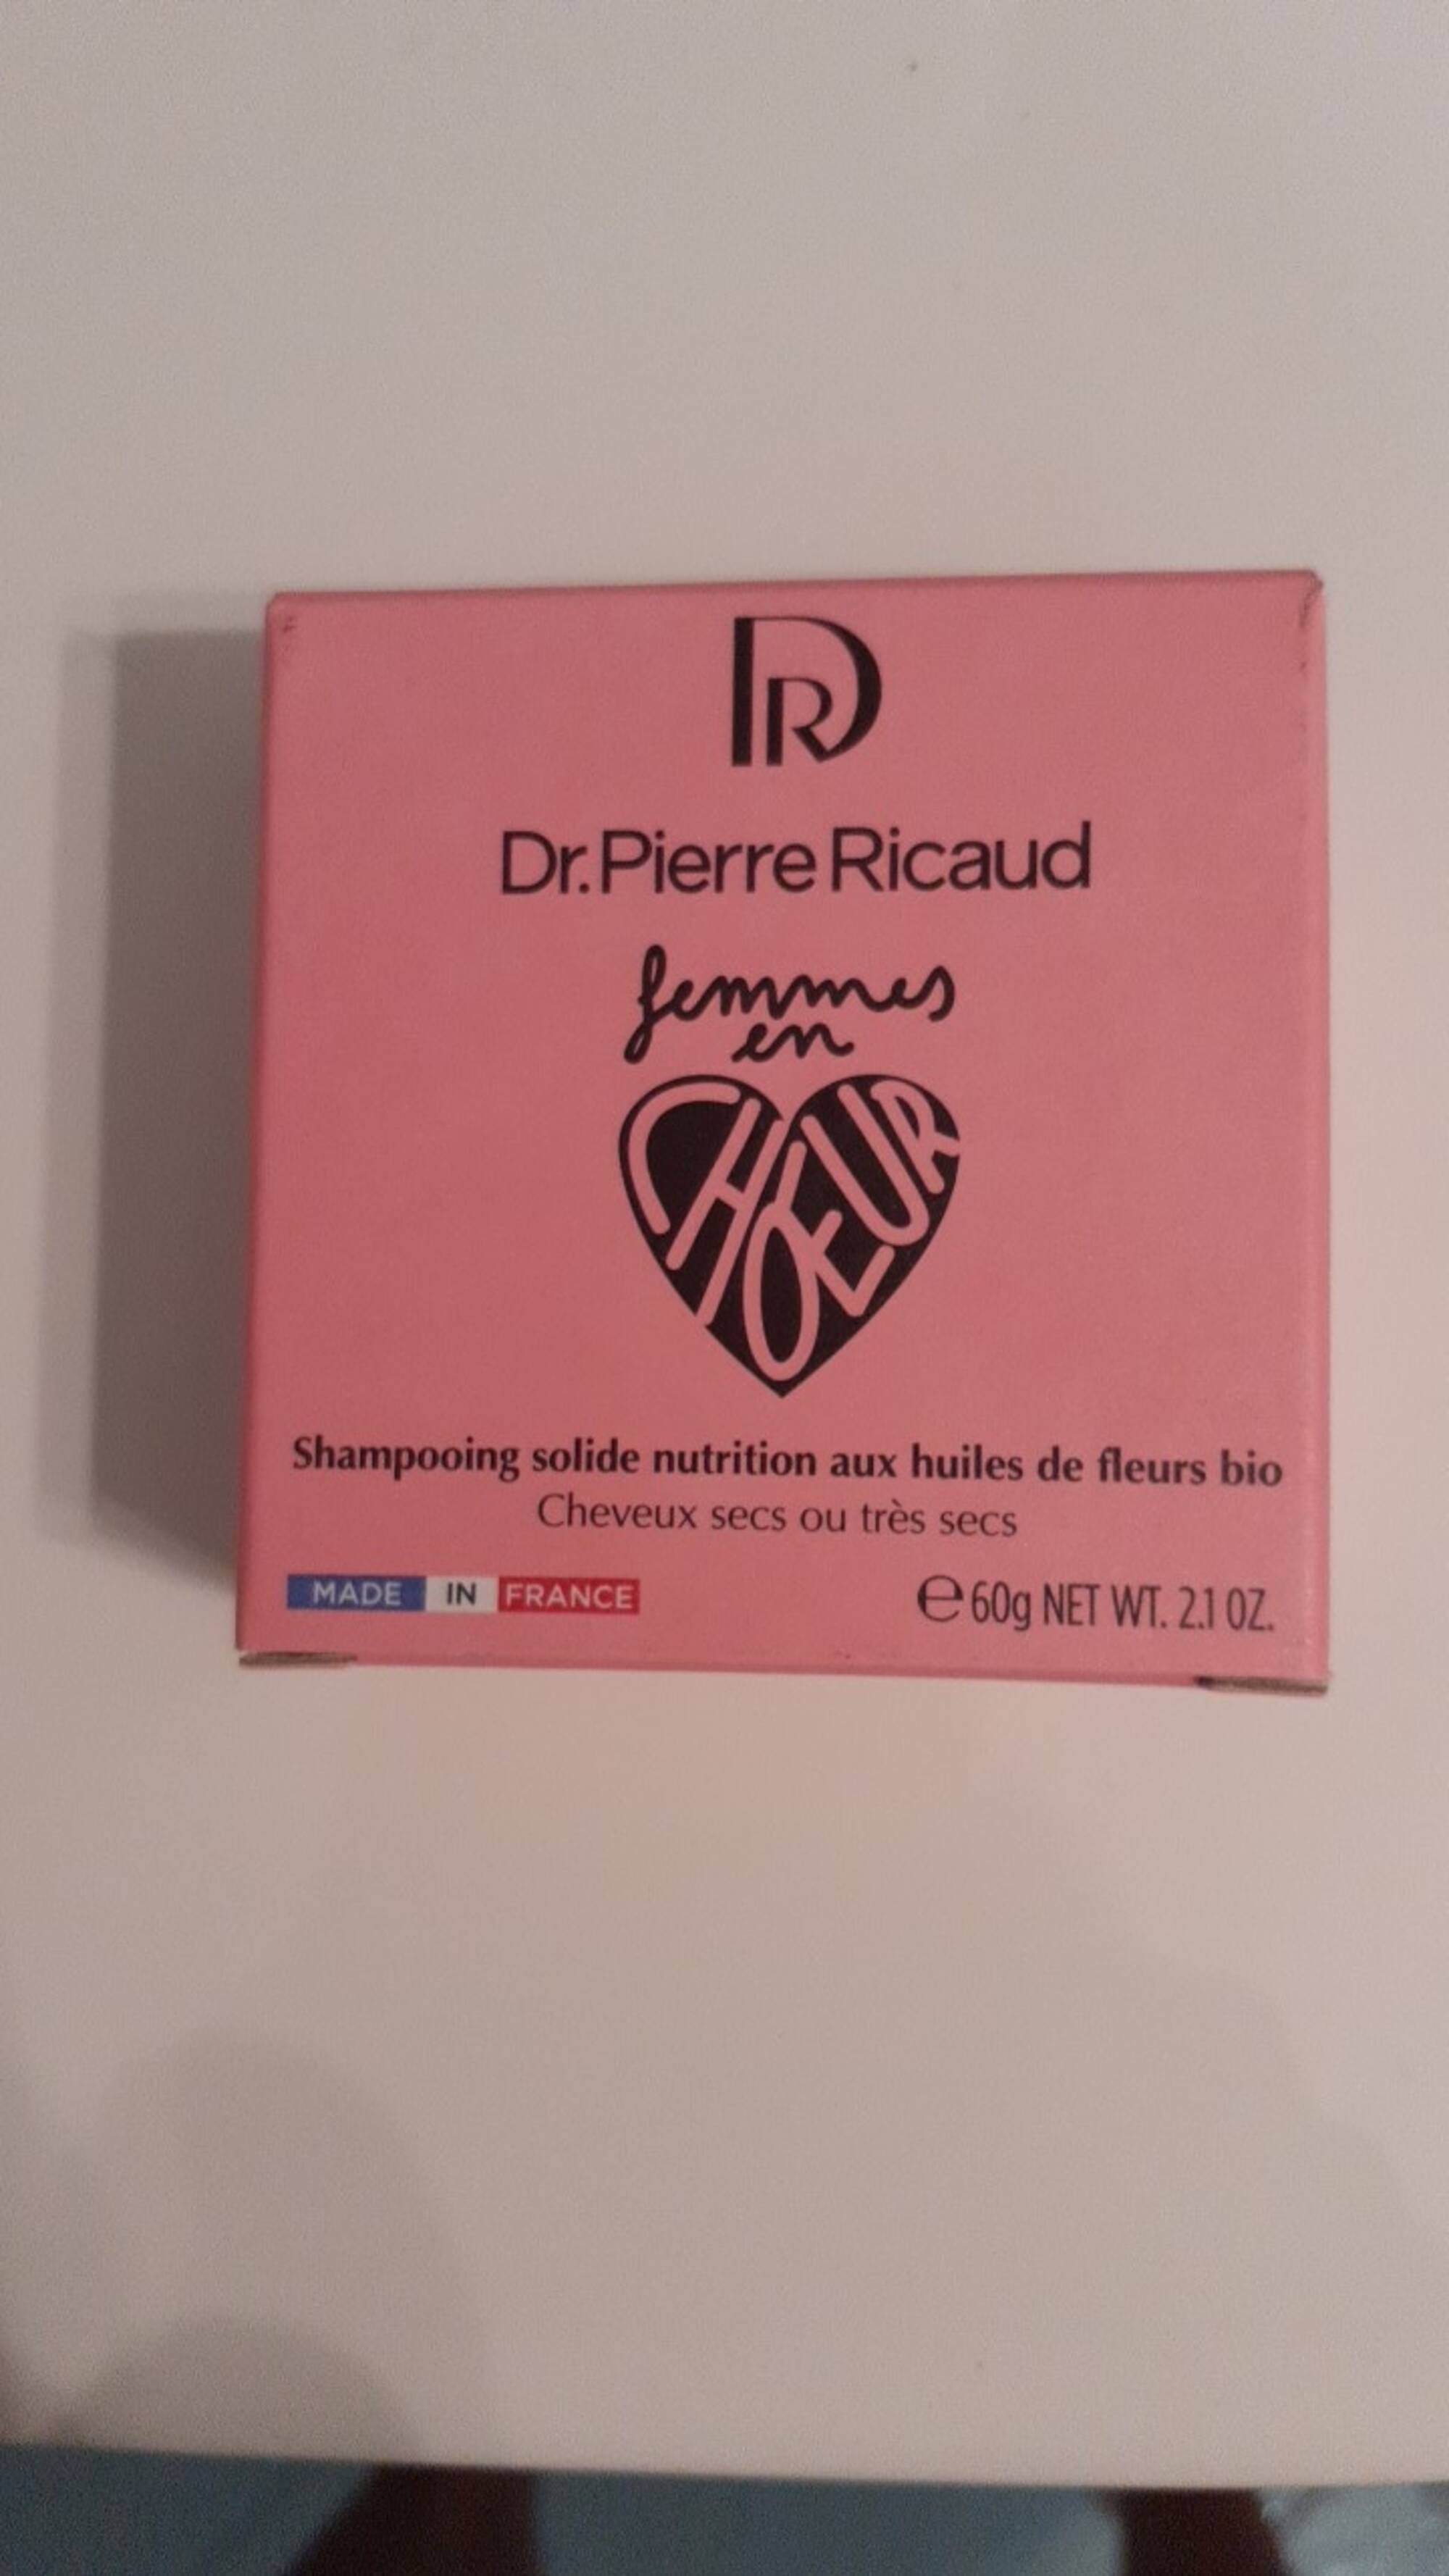 DR PIERRE RICAUD - Femmes en choeur - shampooing 